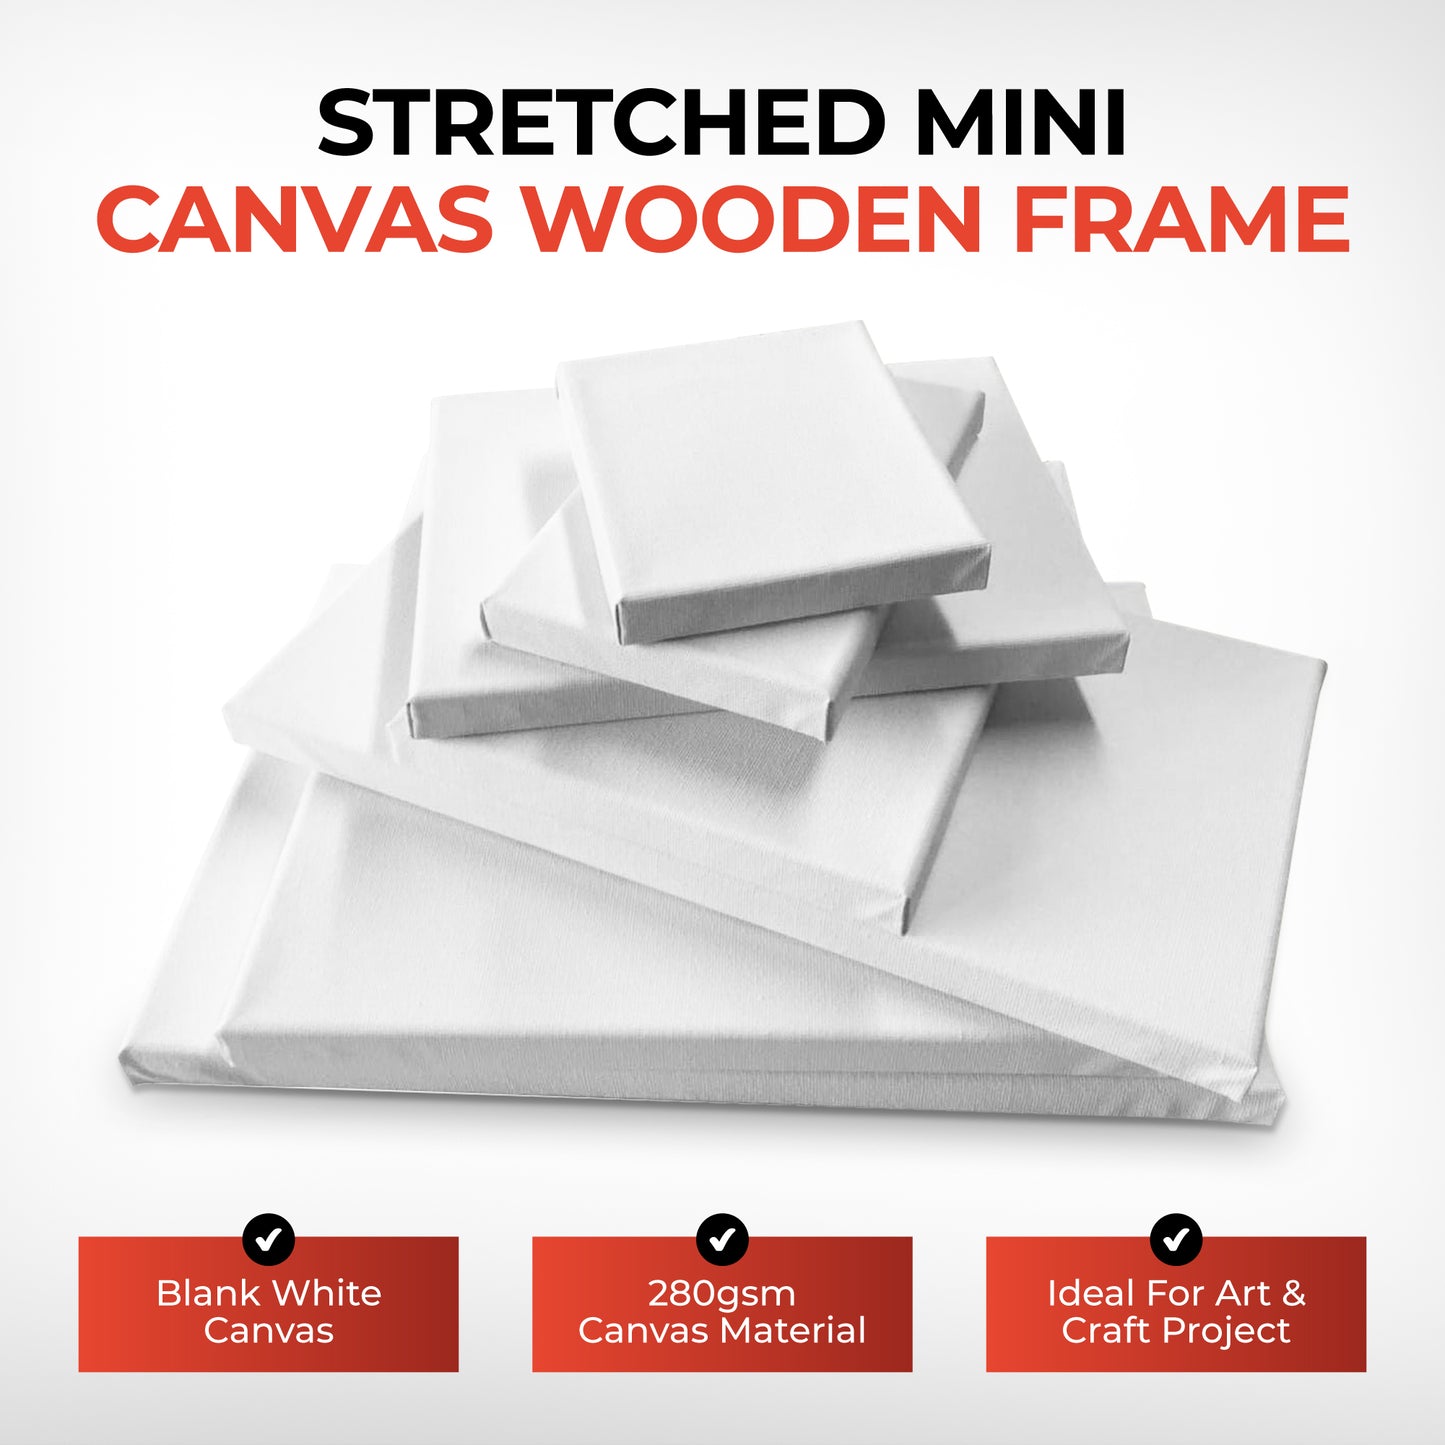 25x25cm Stretched Mini Canvas 280gsm